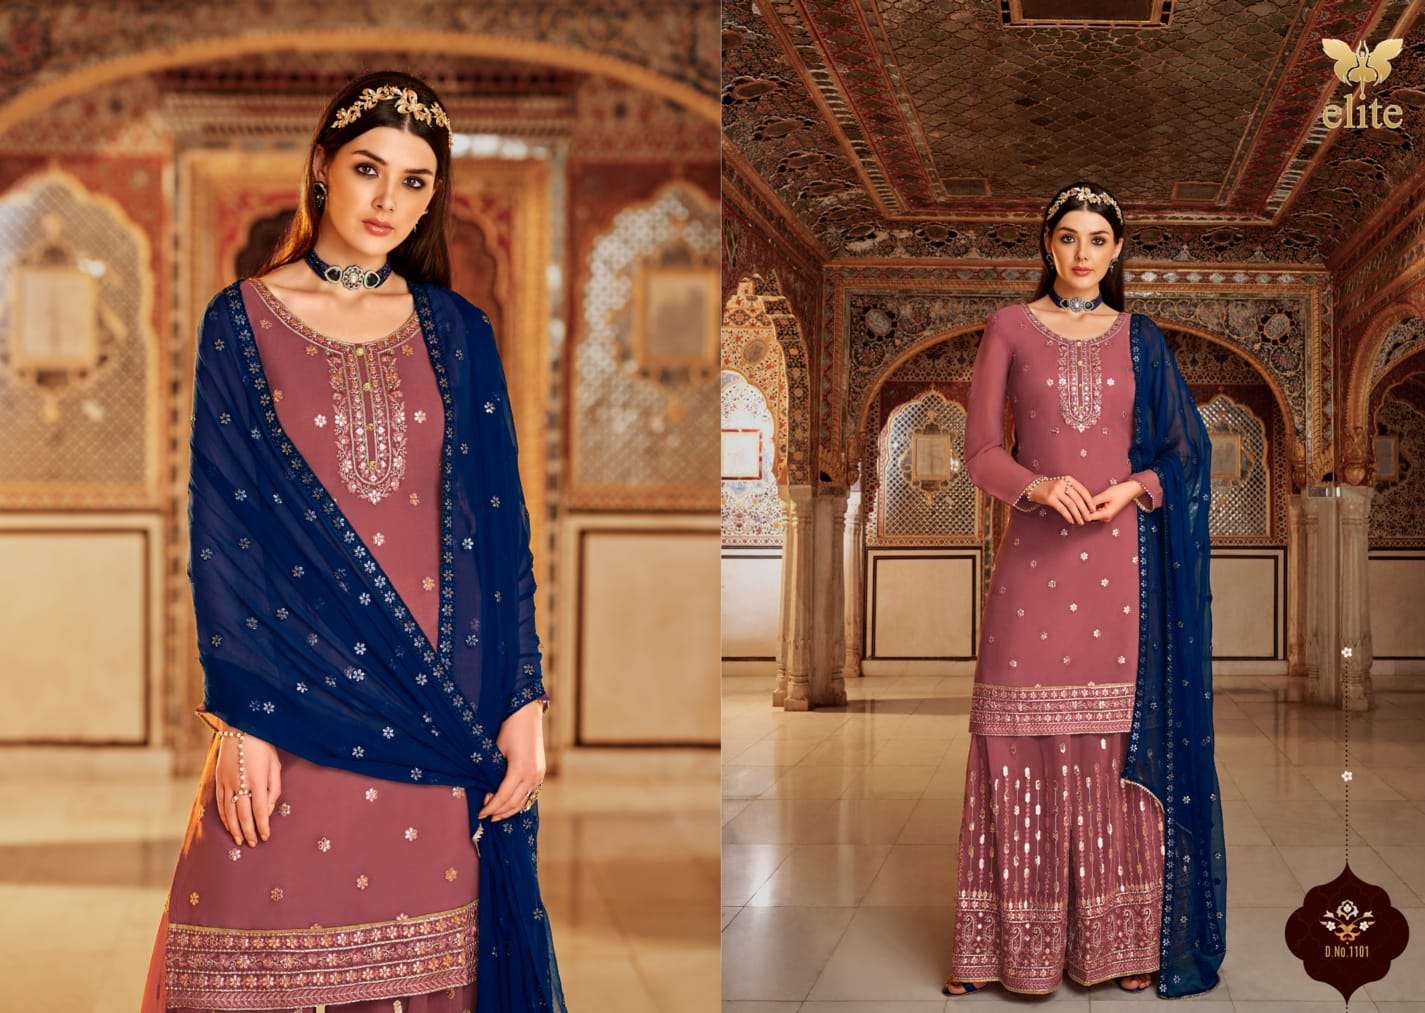 mohini fashion elite 1101-1104 series exclusive designer salwar suits online